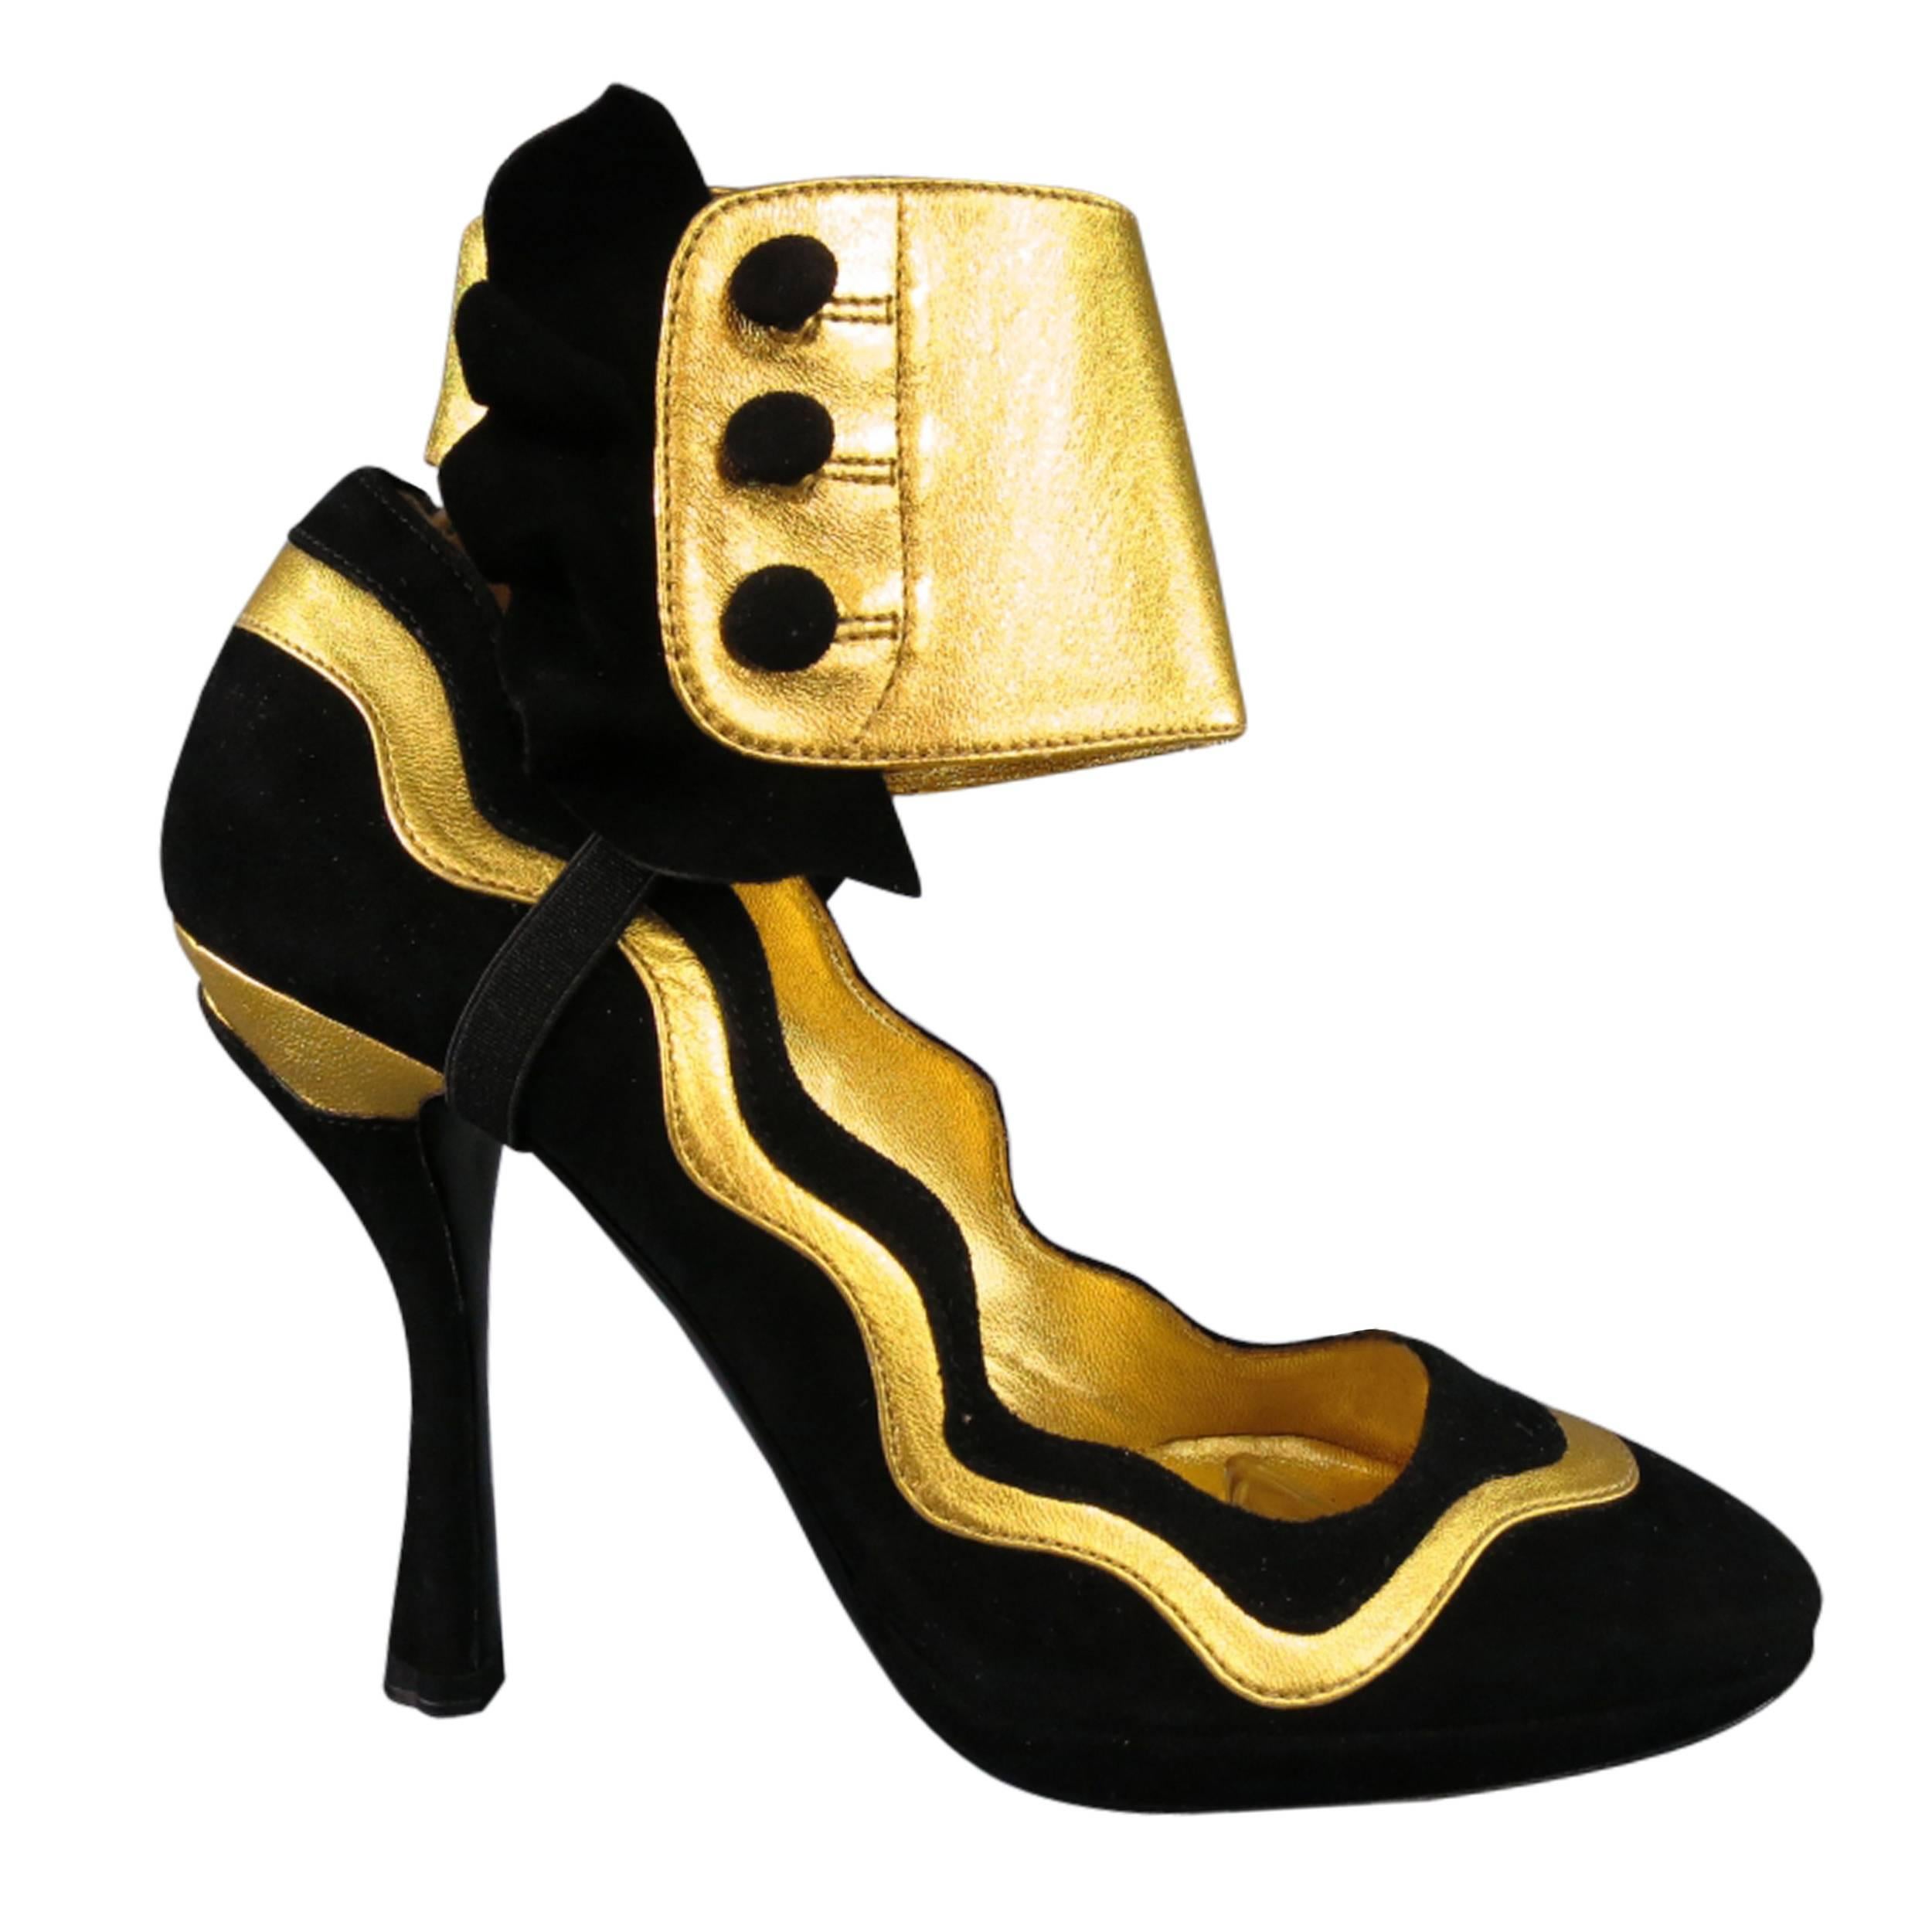 Prada Black and Gold Suede Ankle Ruffle Cuff Metallic Pumps S / S 2008